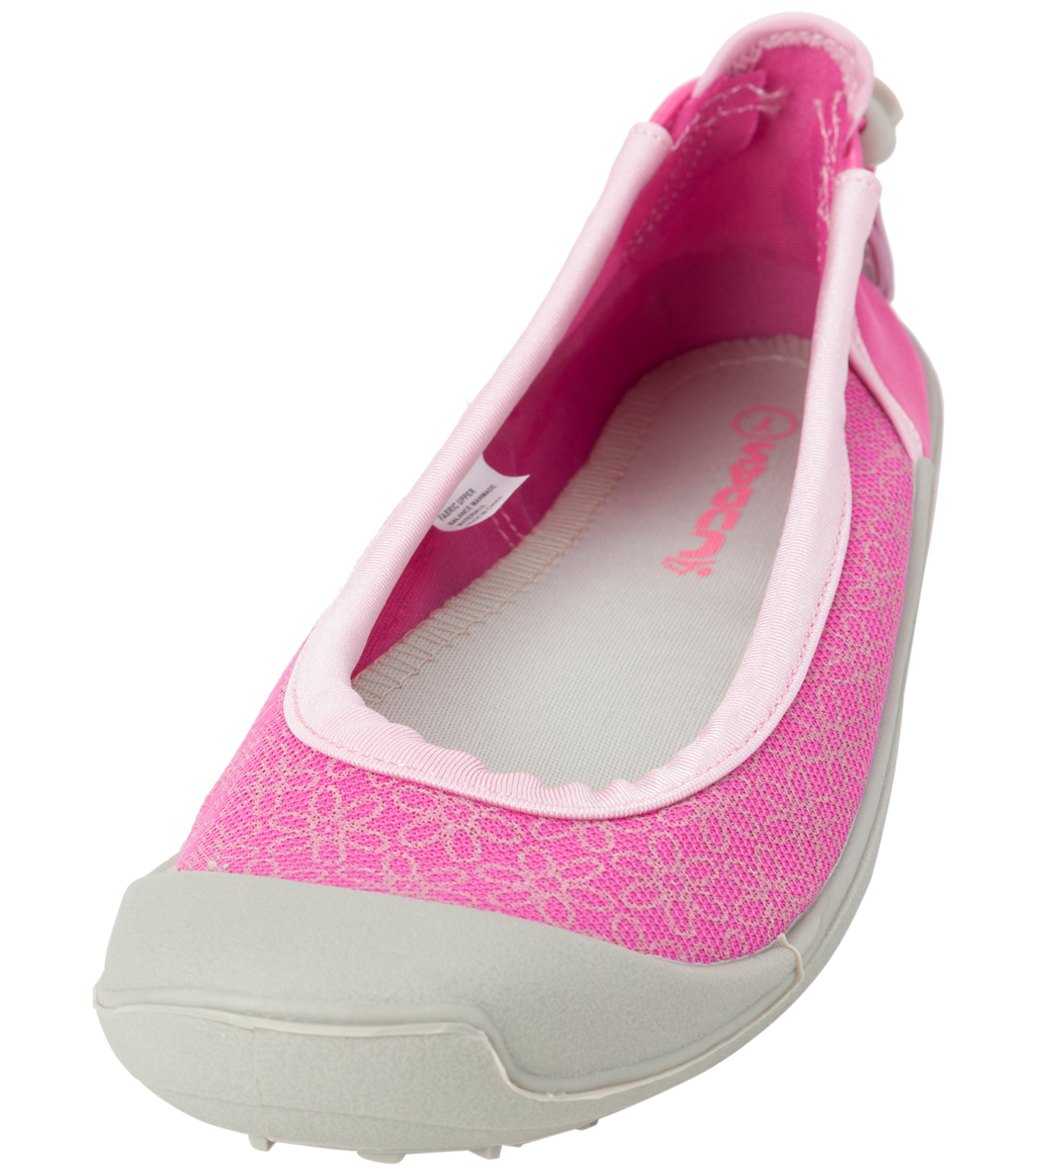 Cudas Women's Catalina Skimmer Water Shoes - Pink 6 - Swimoutlet.com